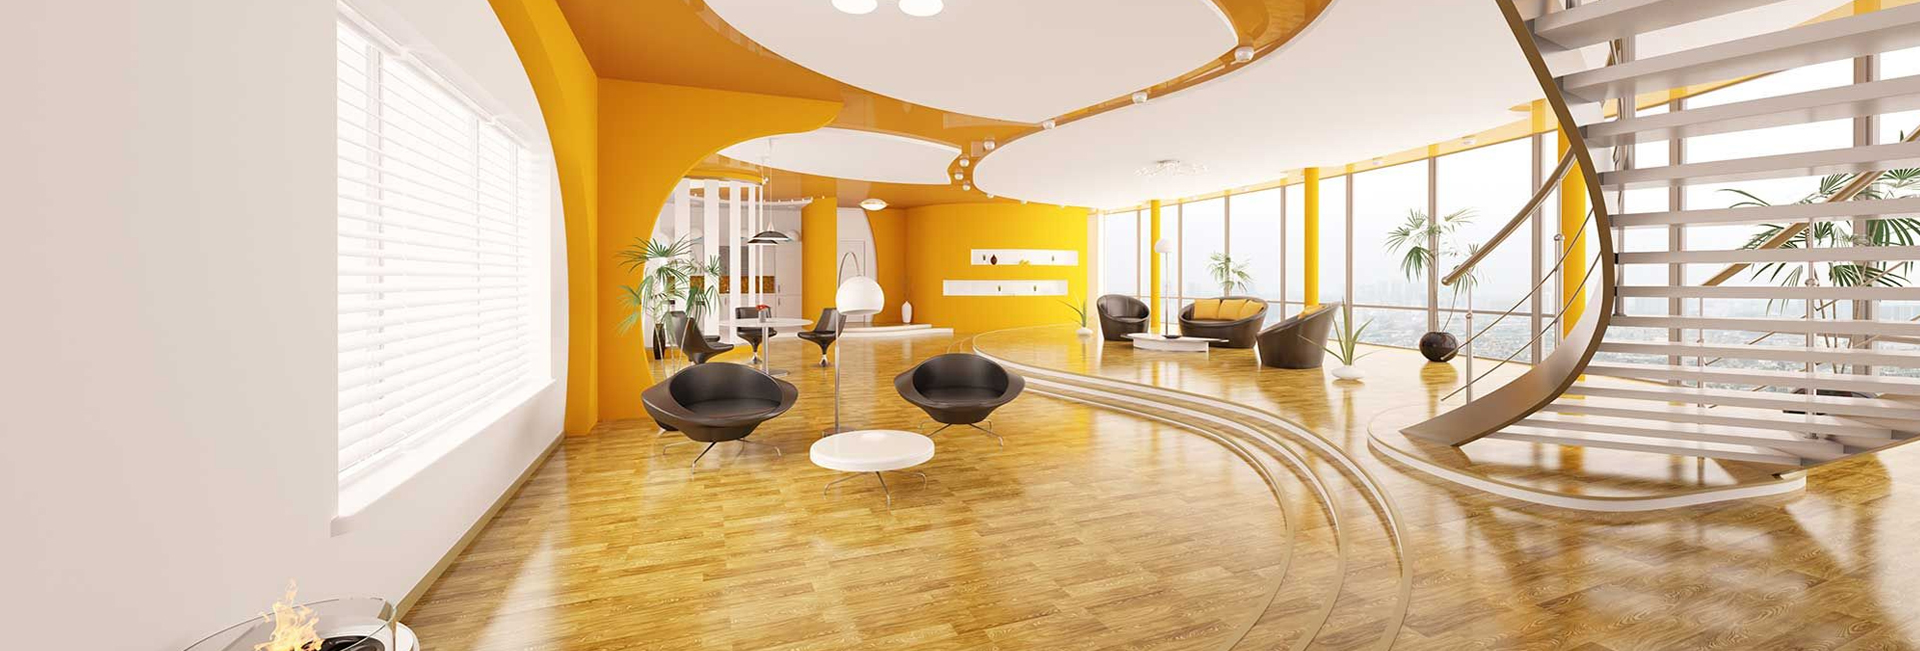 Diseño interior en tono naranja